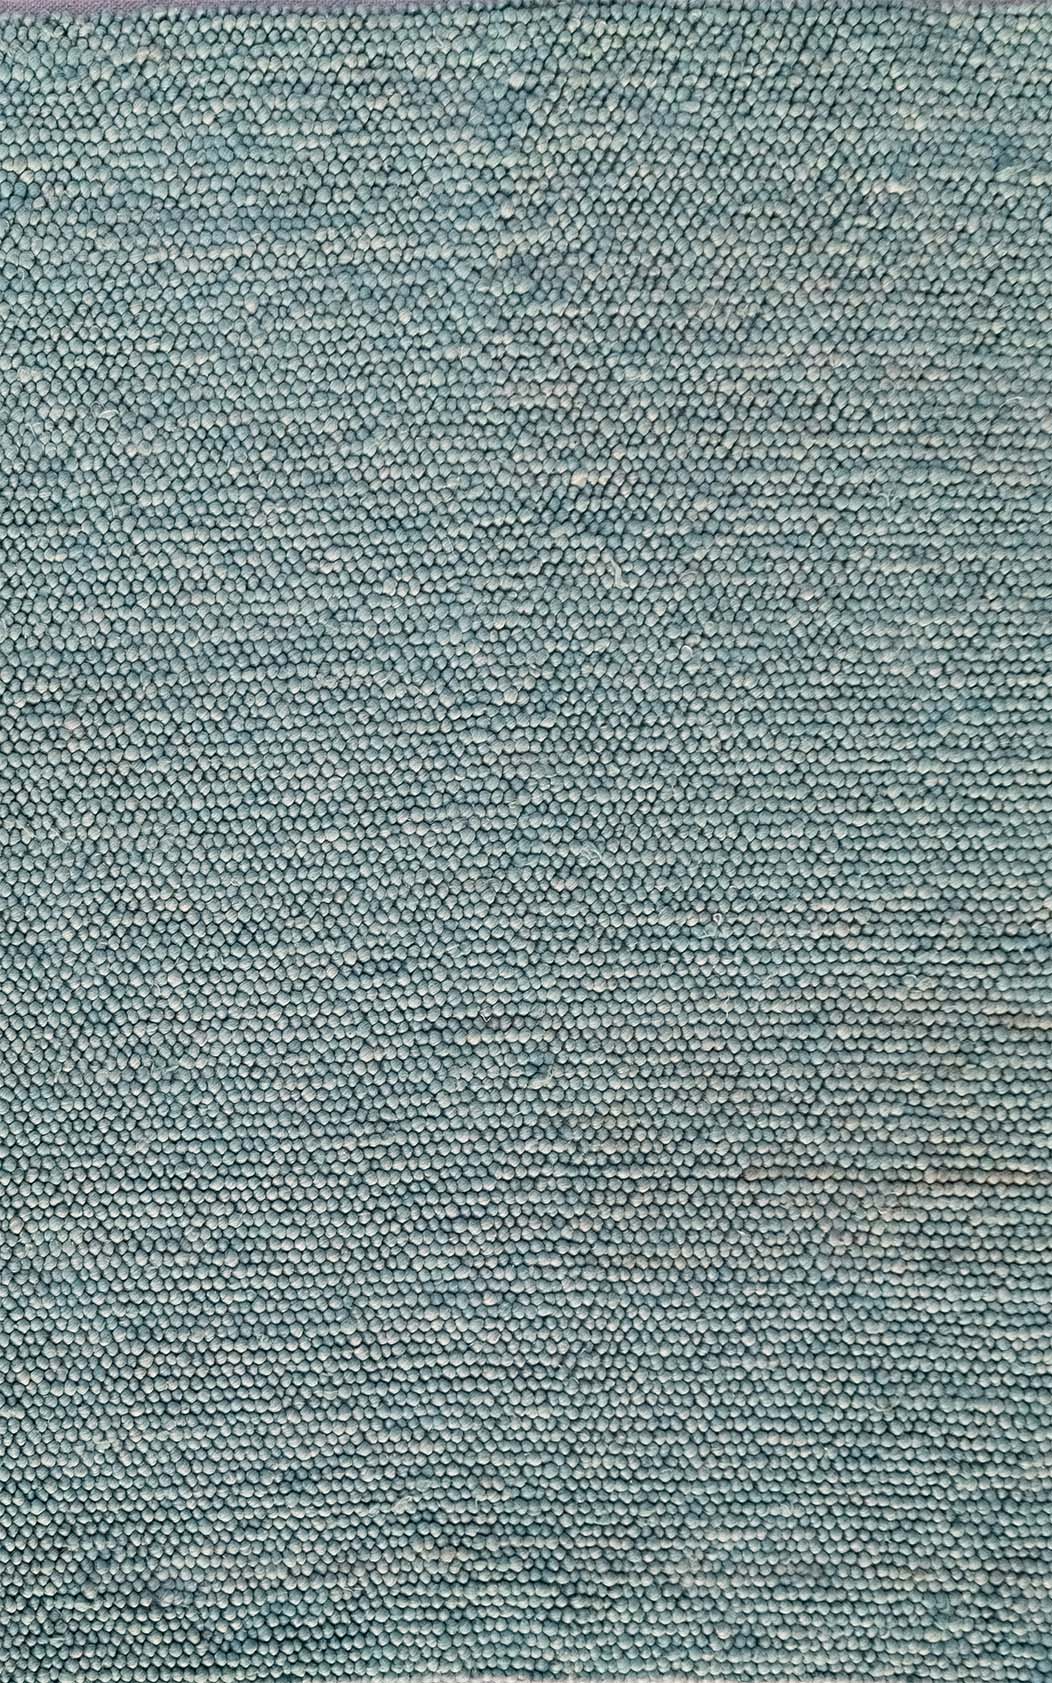 Pave 8509 Turquoise Cornerstone Area Rug Product Image